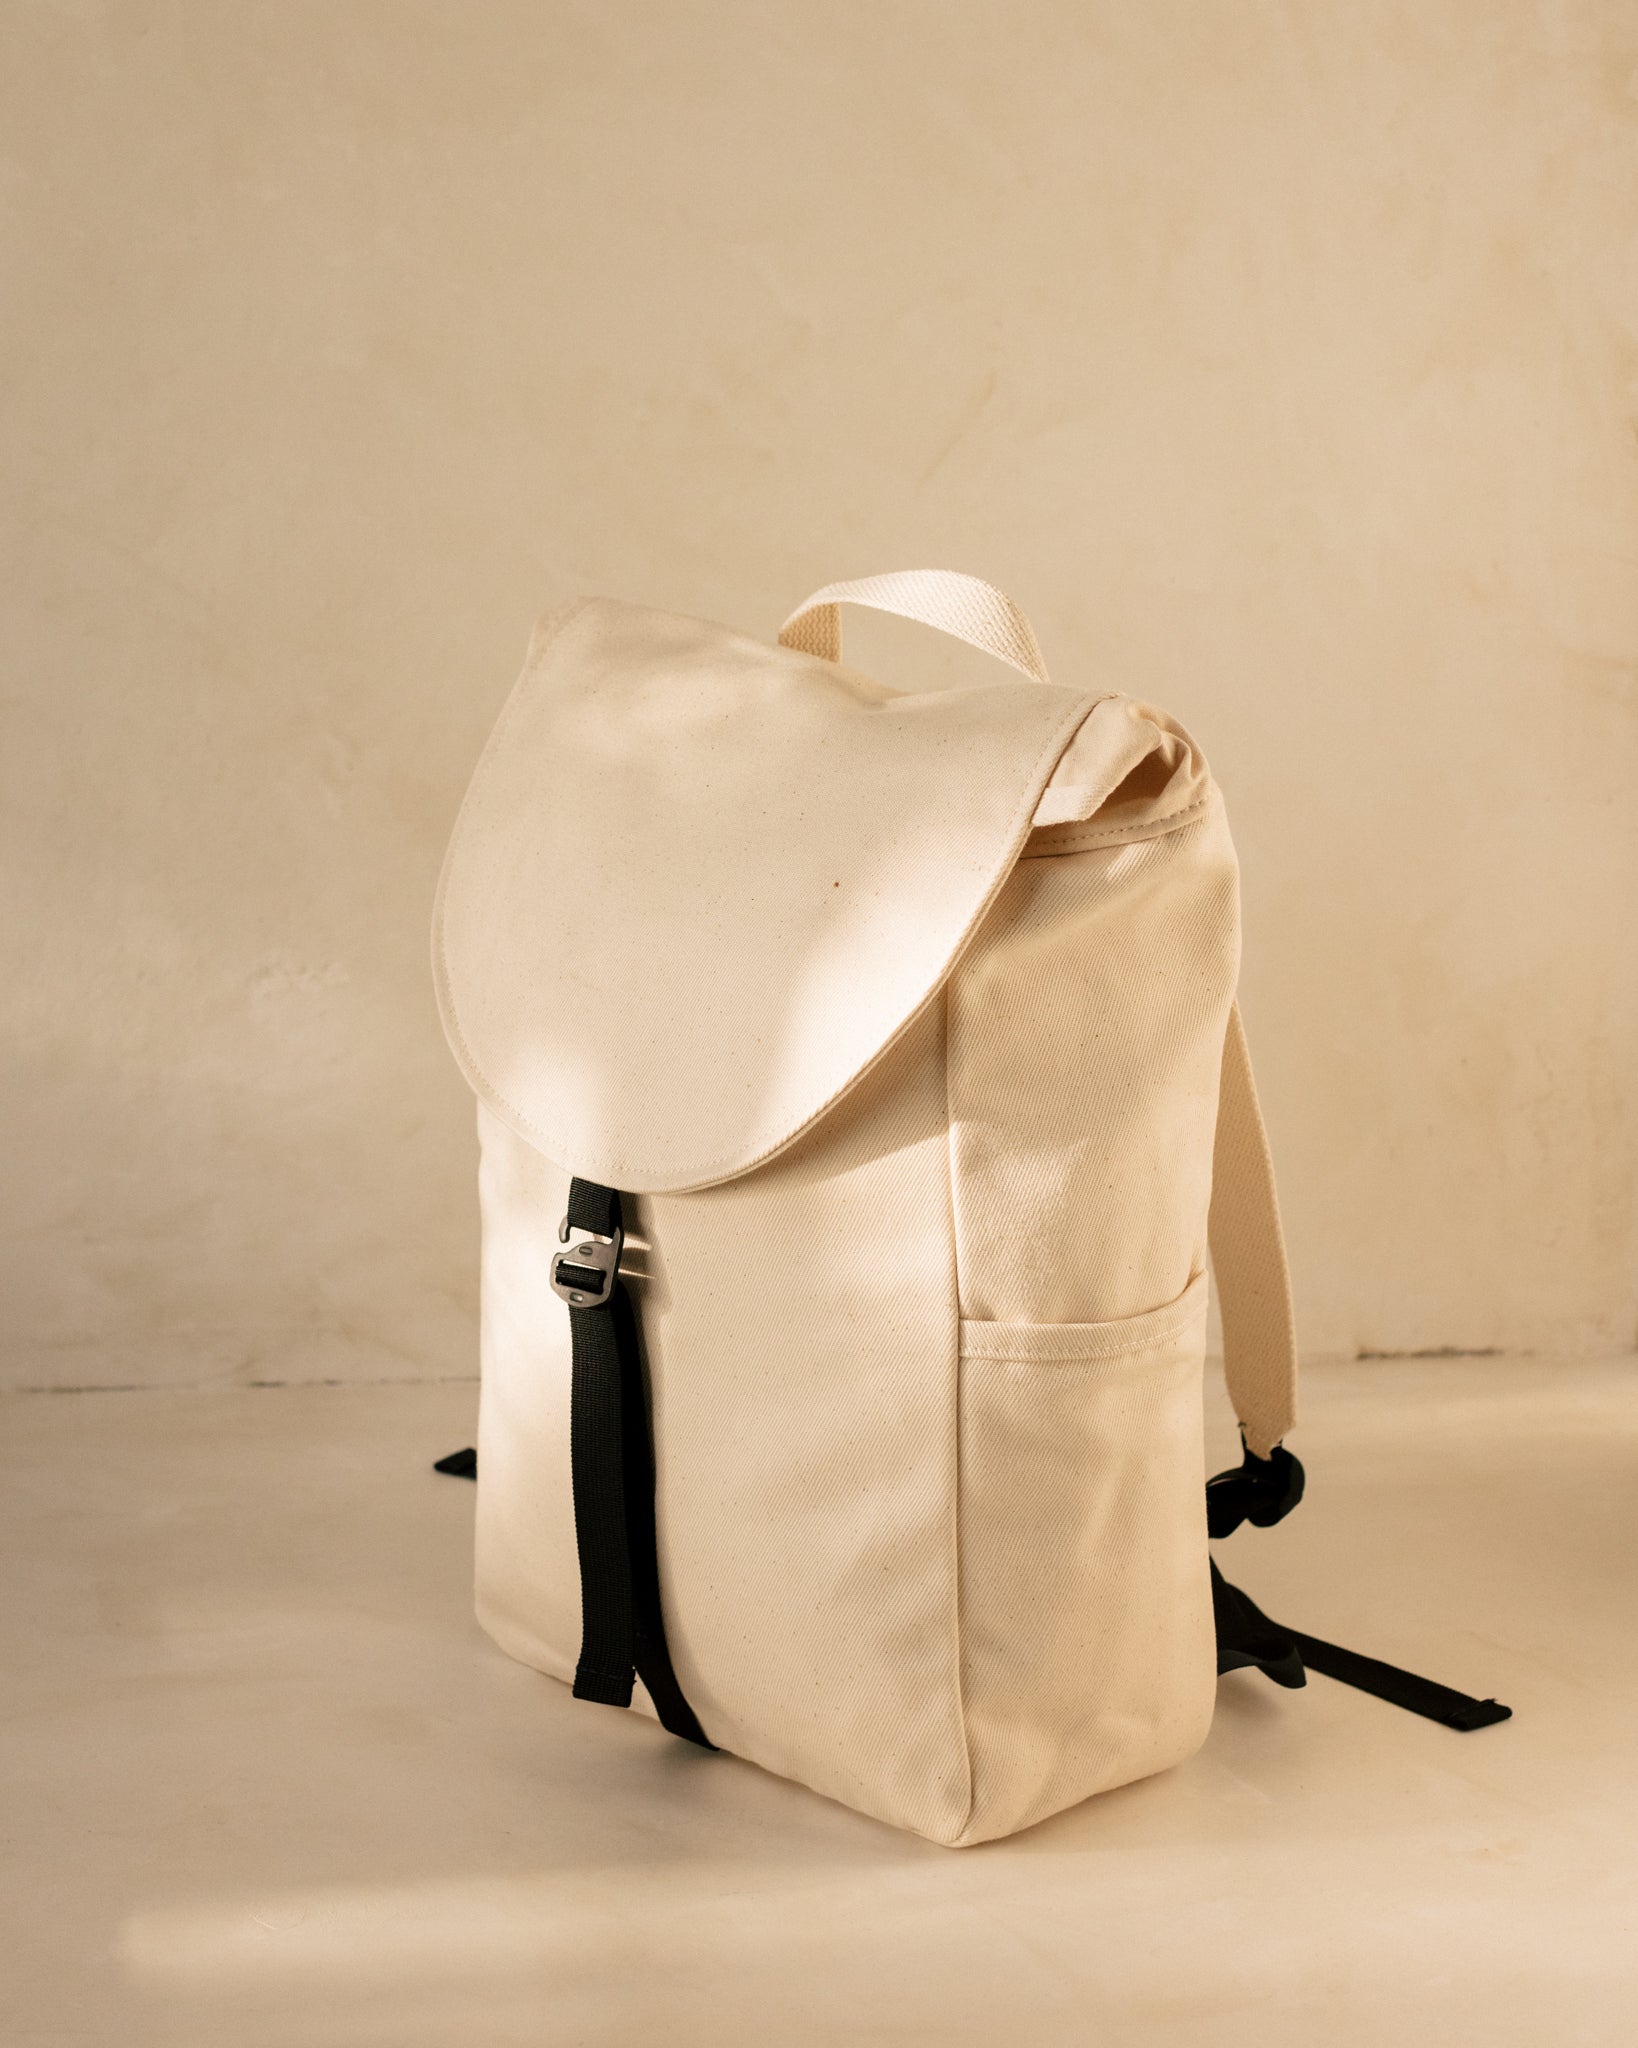 Josh Backpack cloth bag